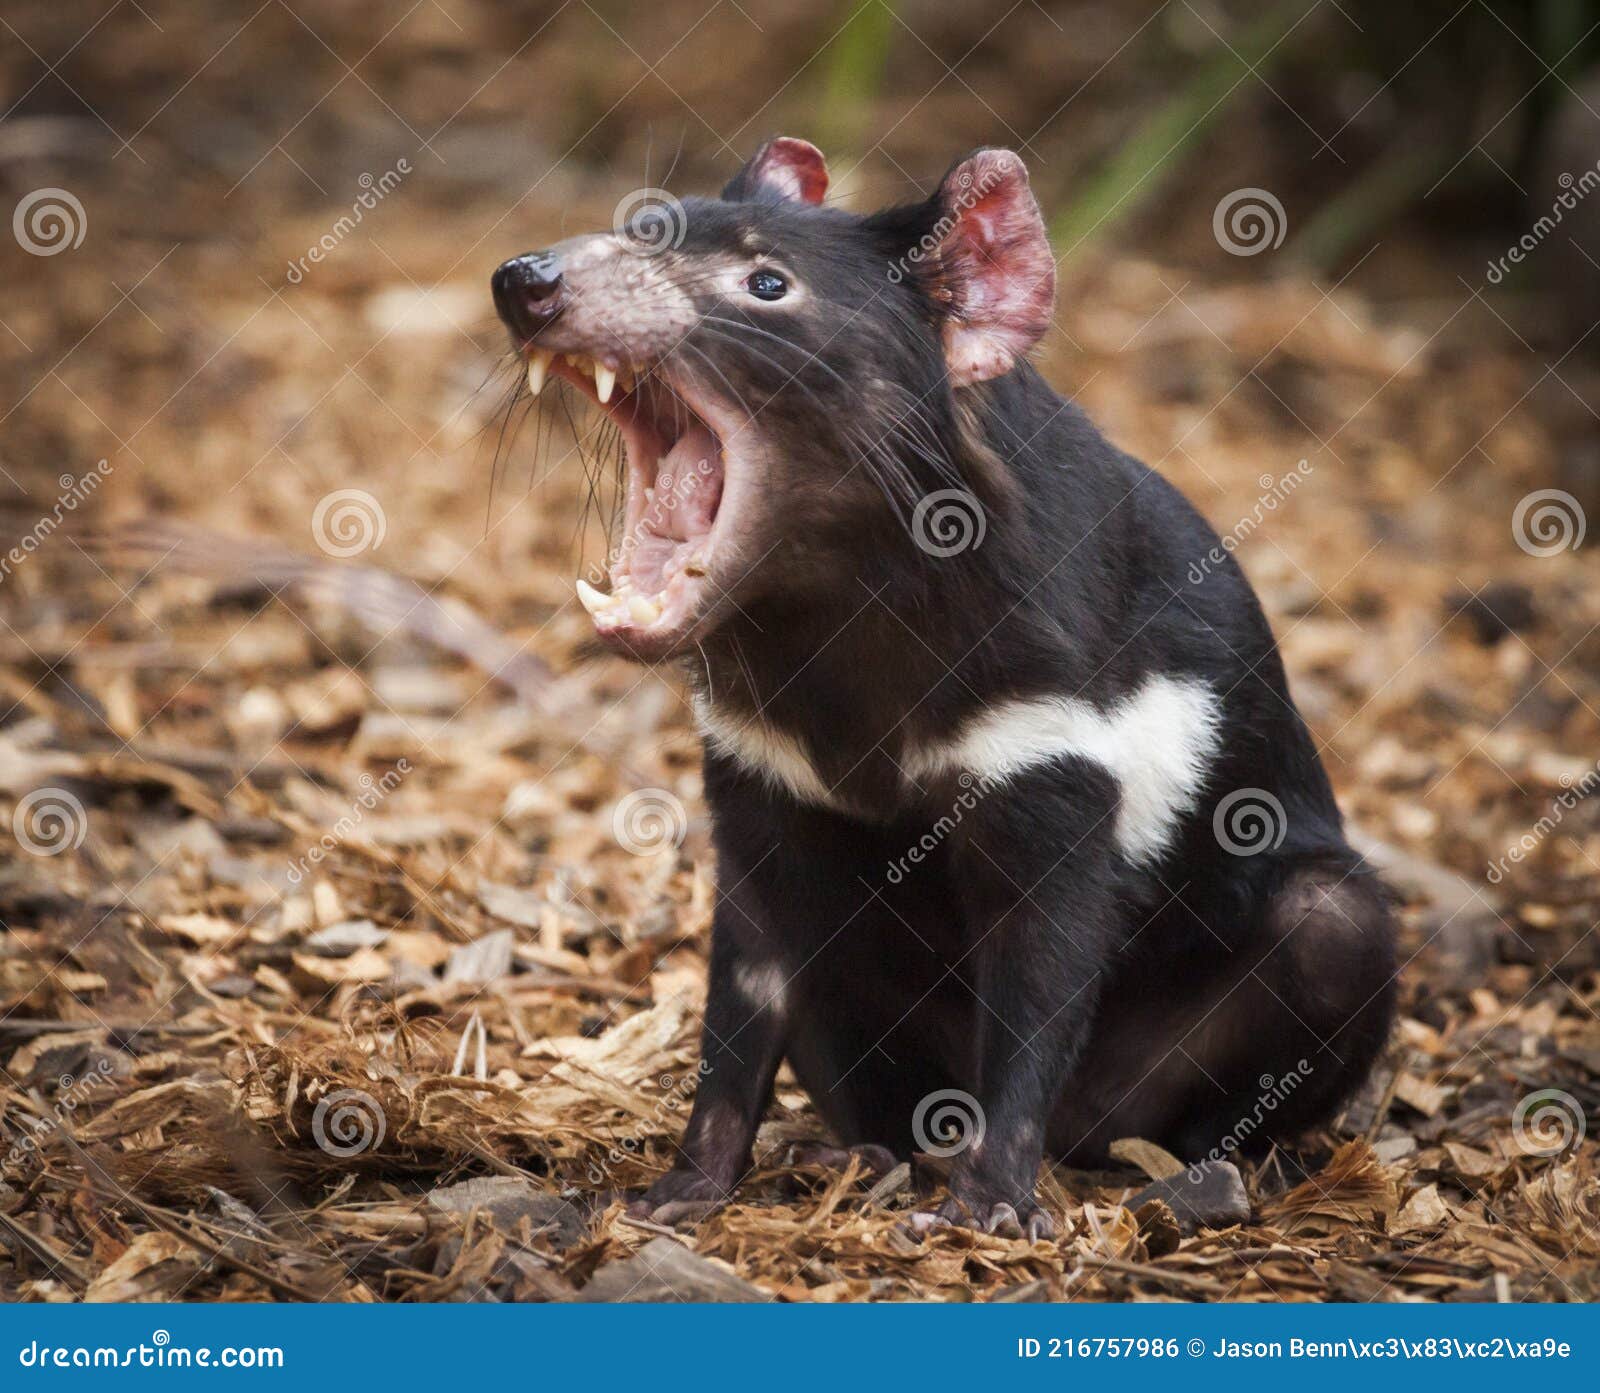 tasmanian devil fang roar. carnivorous marsupial.